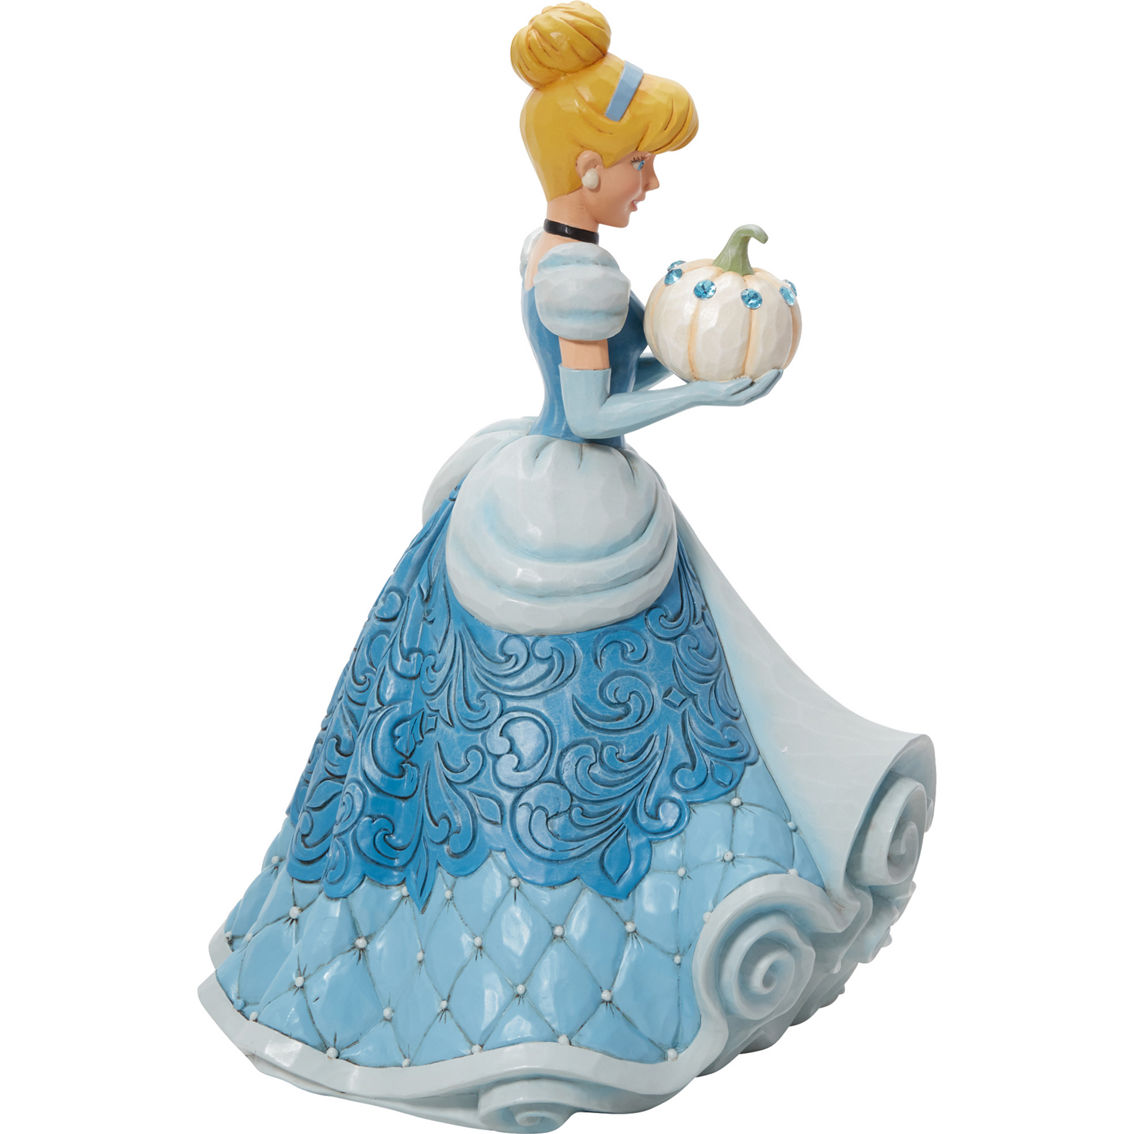 Jim Shore Disney Traditions Cinderella Deluxe Figurine - Image 3 of 5